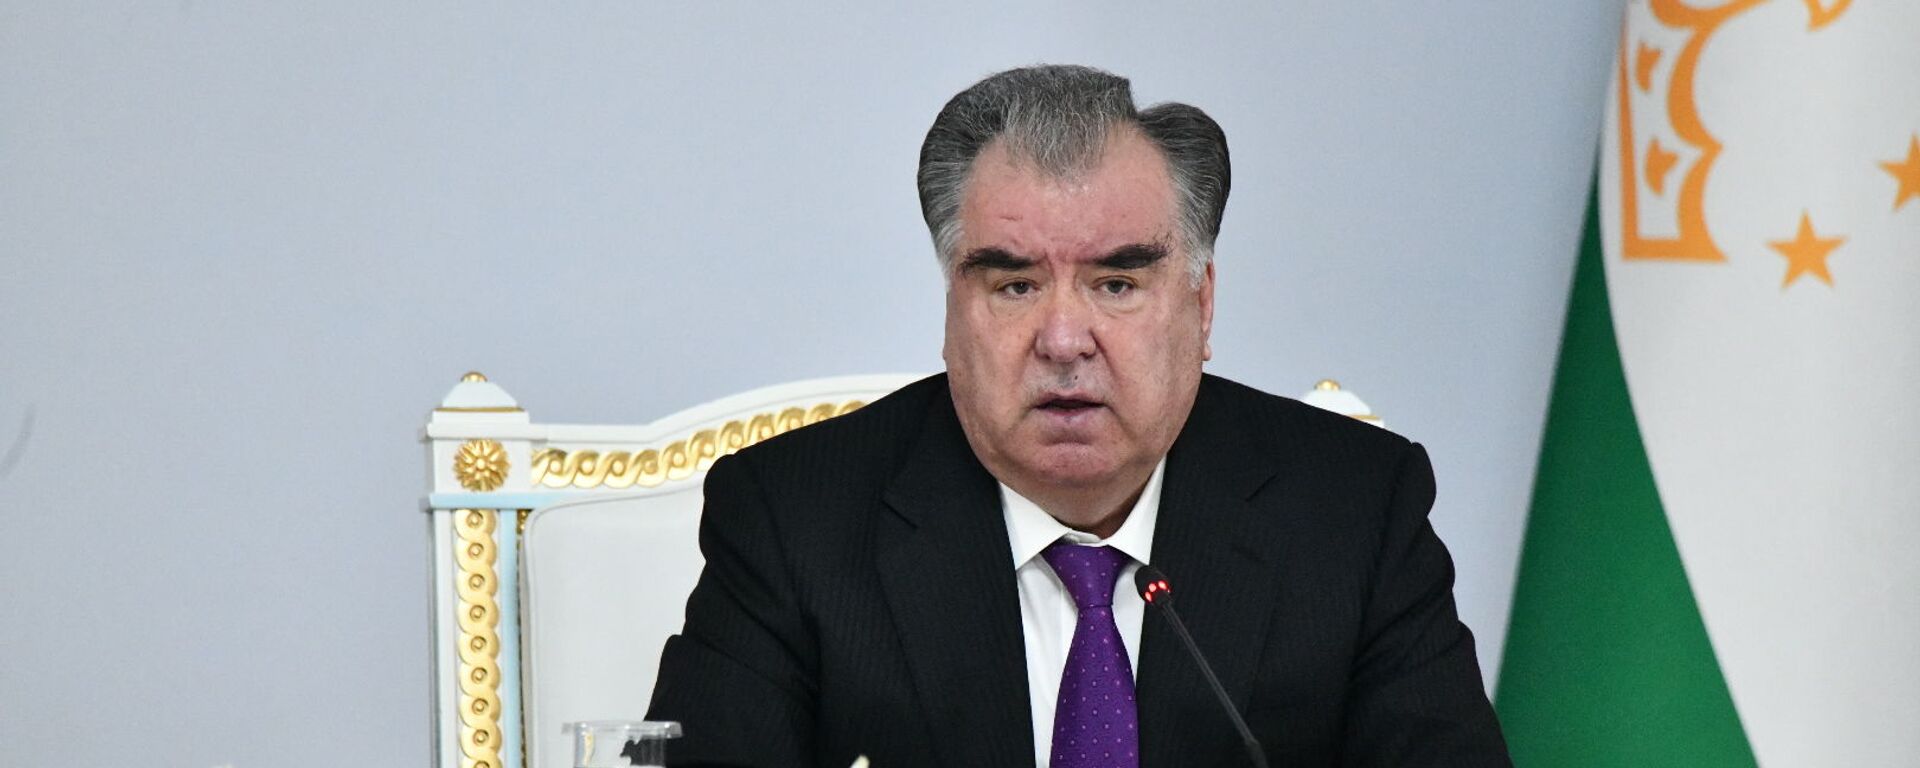 Президент Республики Таджикистан Эмомали Рахмон - Sputnik Таджикистан, 1920, 12.04.2021